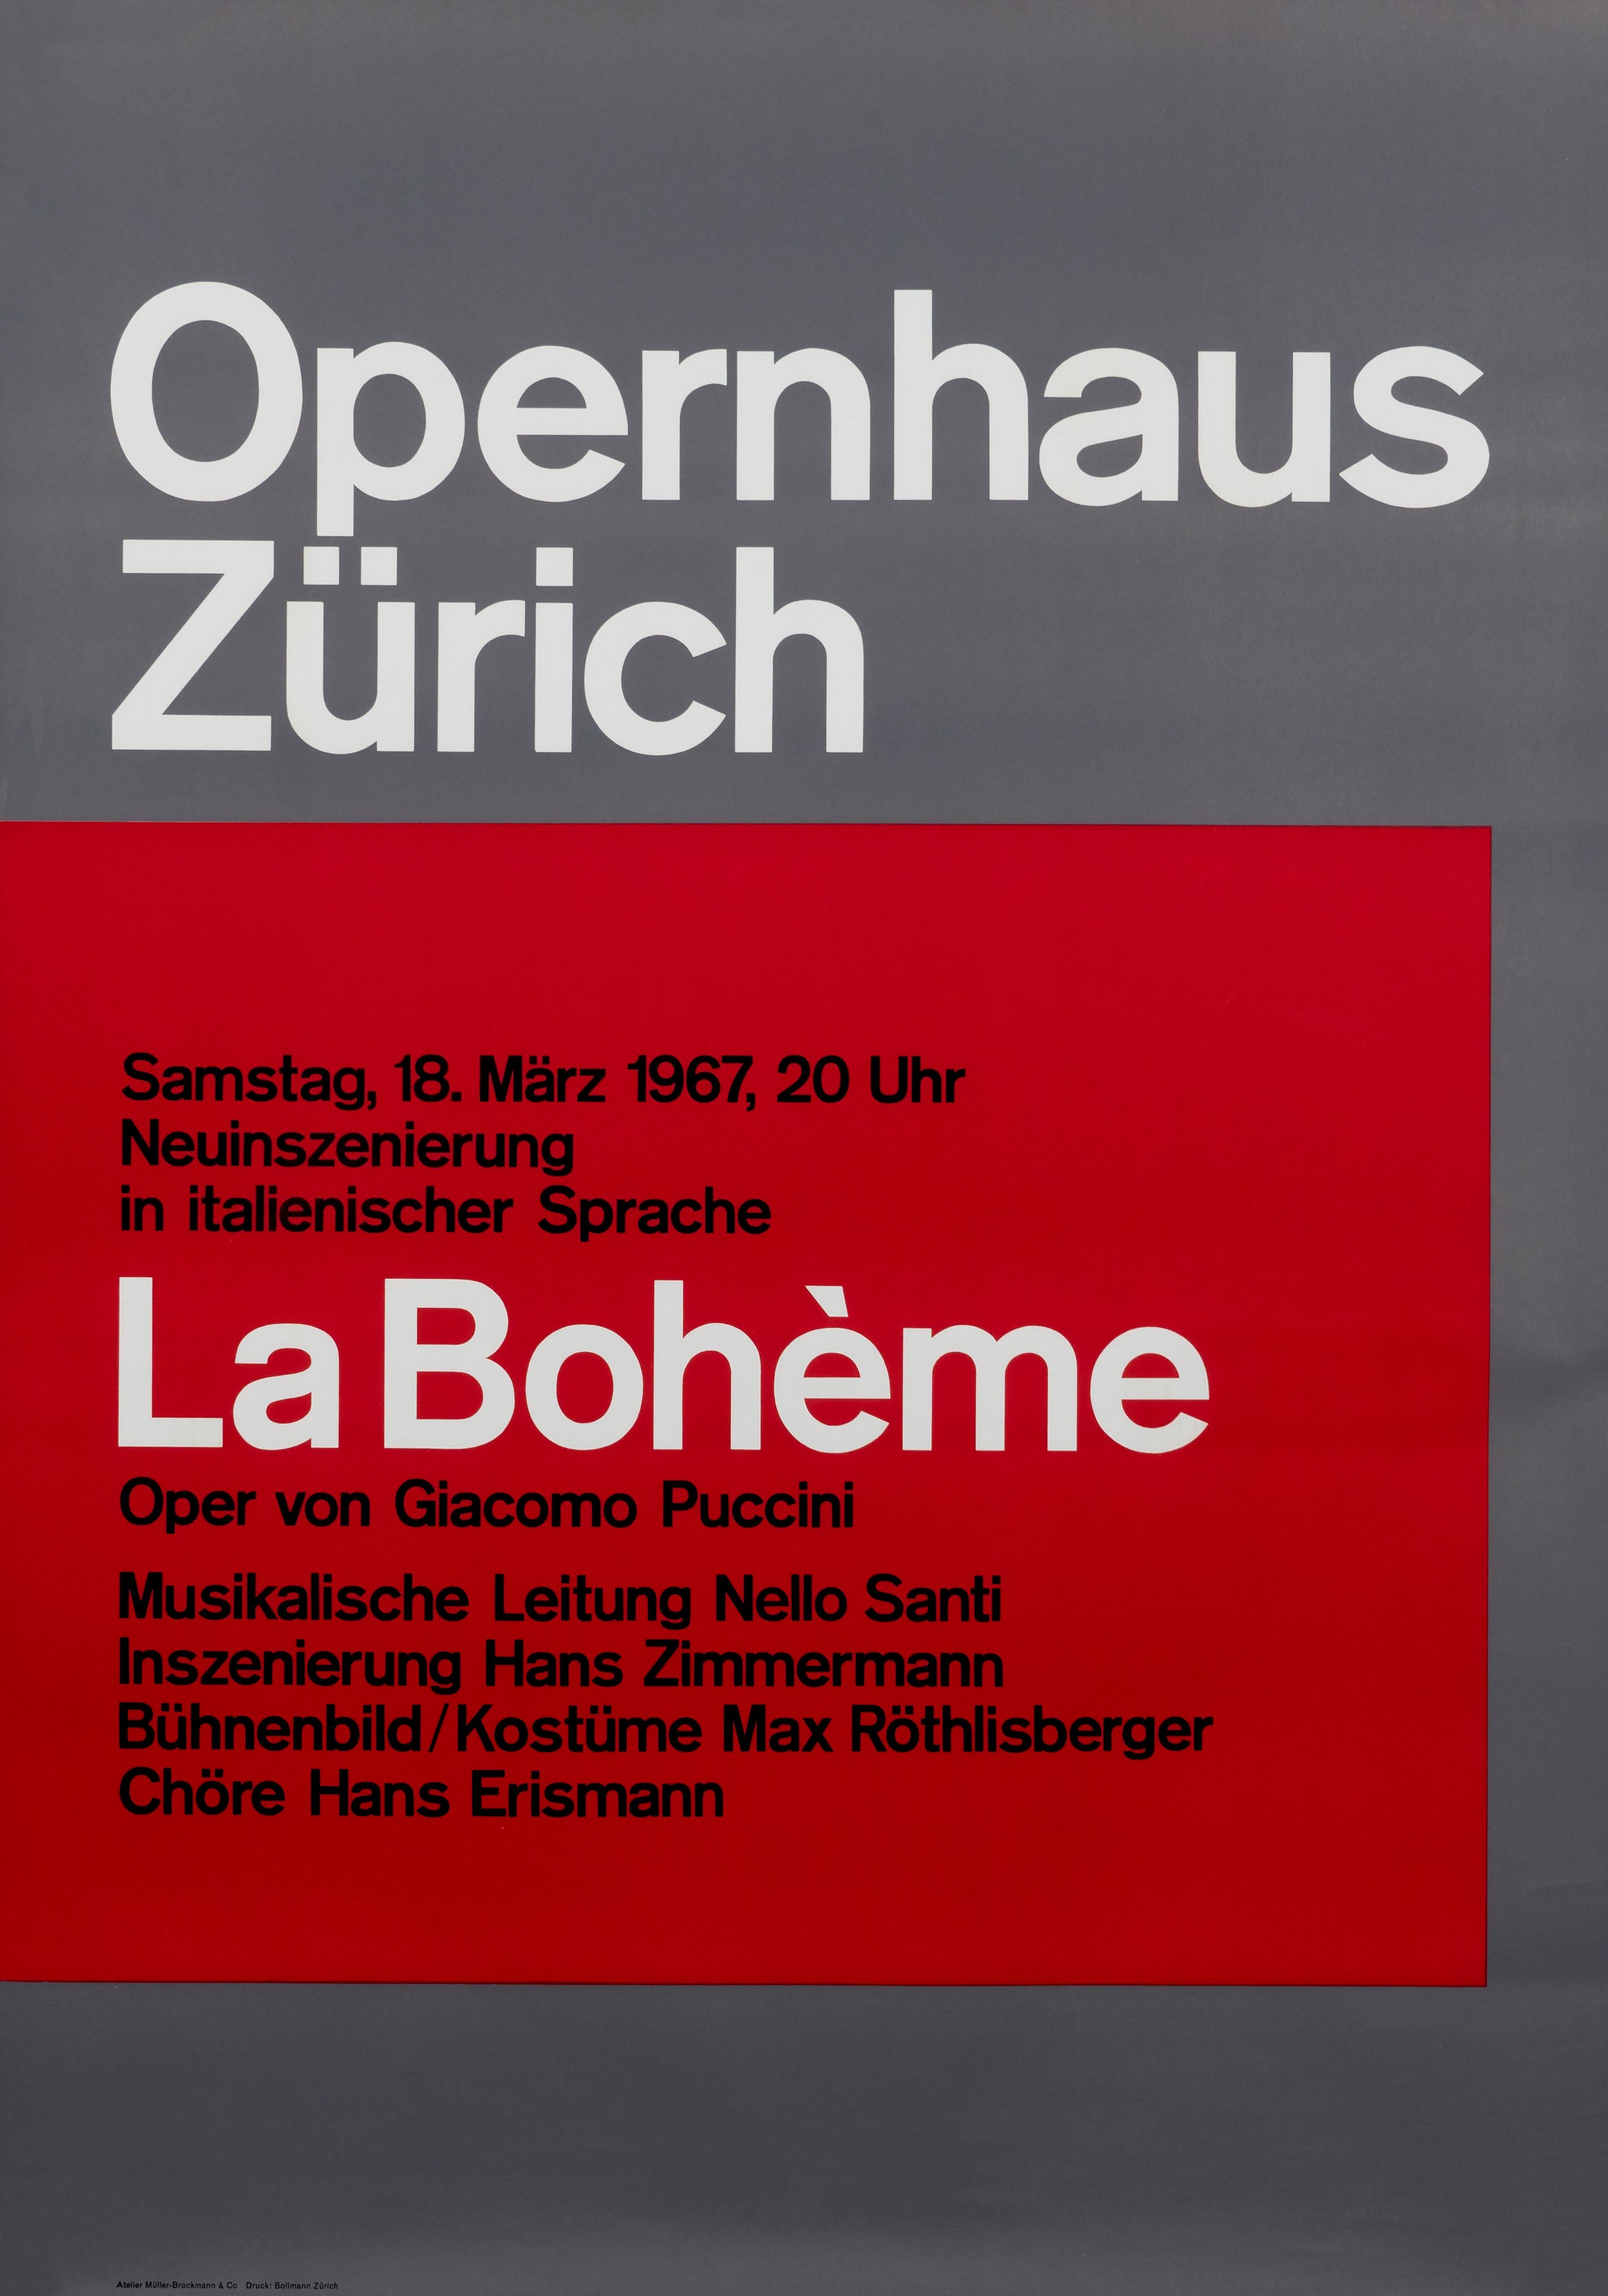 "Opernhaus Zurich -  La Boheme" Swiss Puccini Opera Original Vintage Poster - Print by Josef Müller-Brockmann